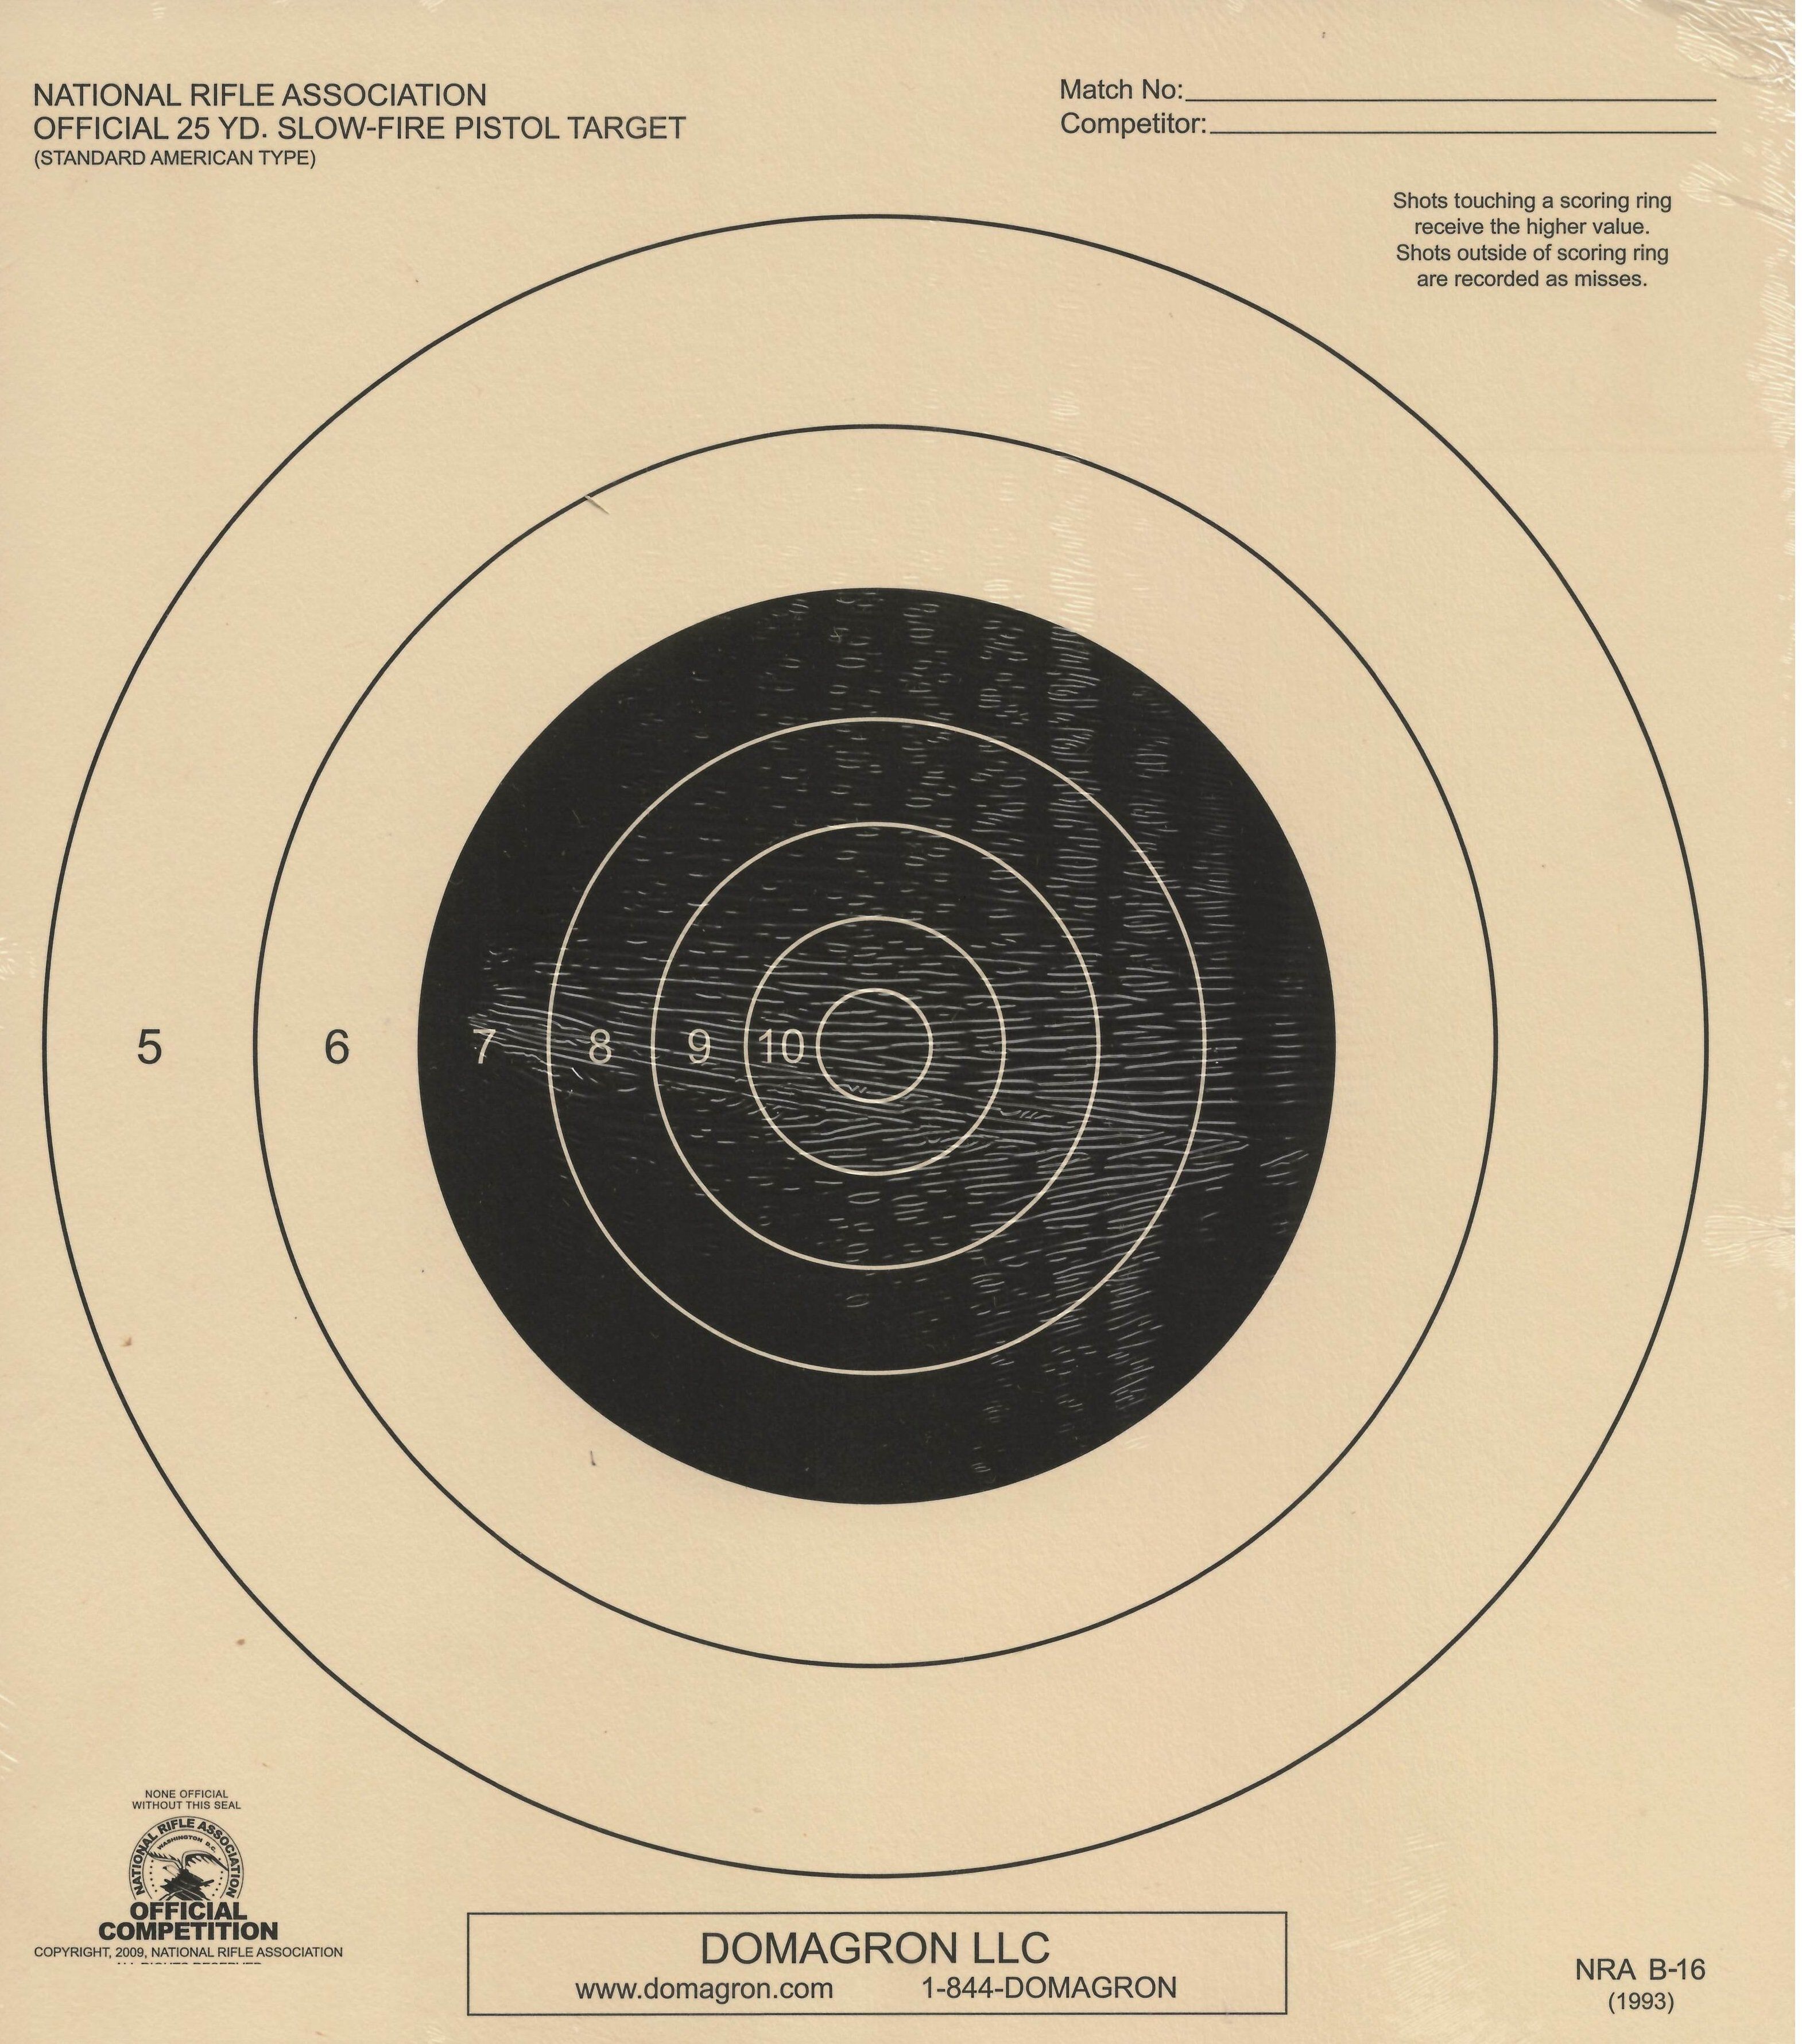 B-16 - 25 Yard Slow Fire Pistol Target Official NRA Target